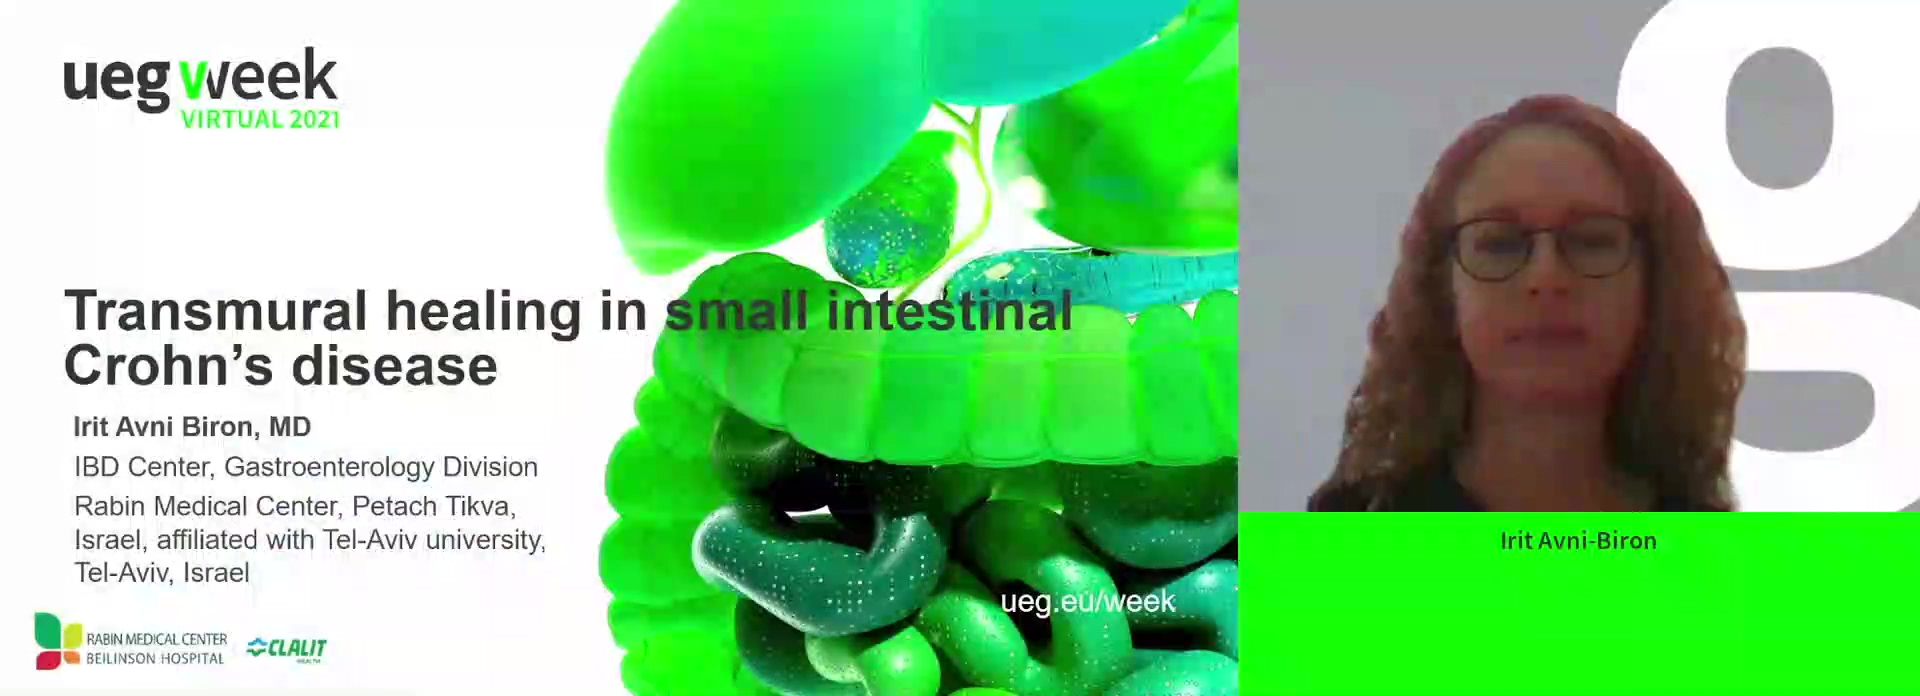 Transmural healing in small intestinal Crohn's disease